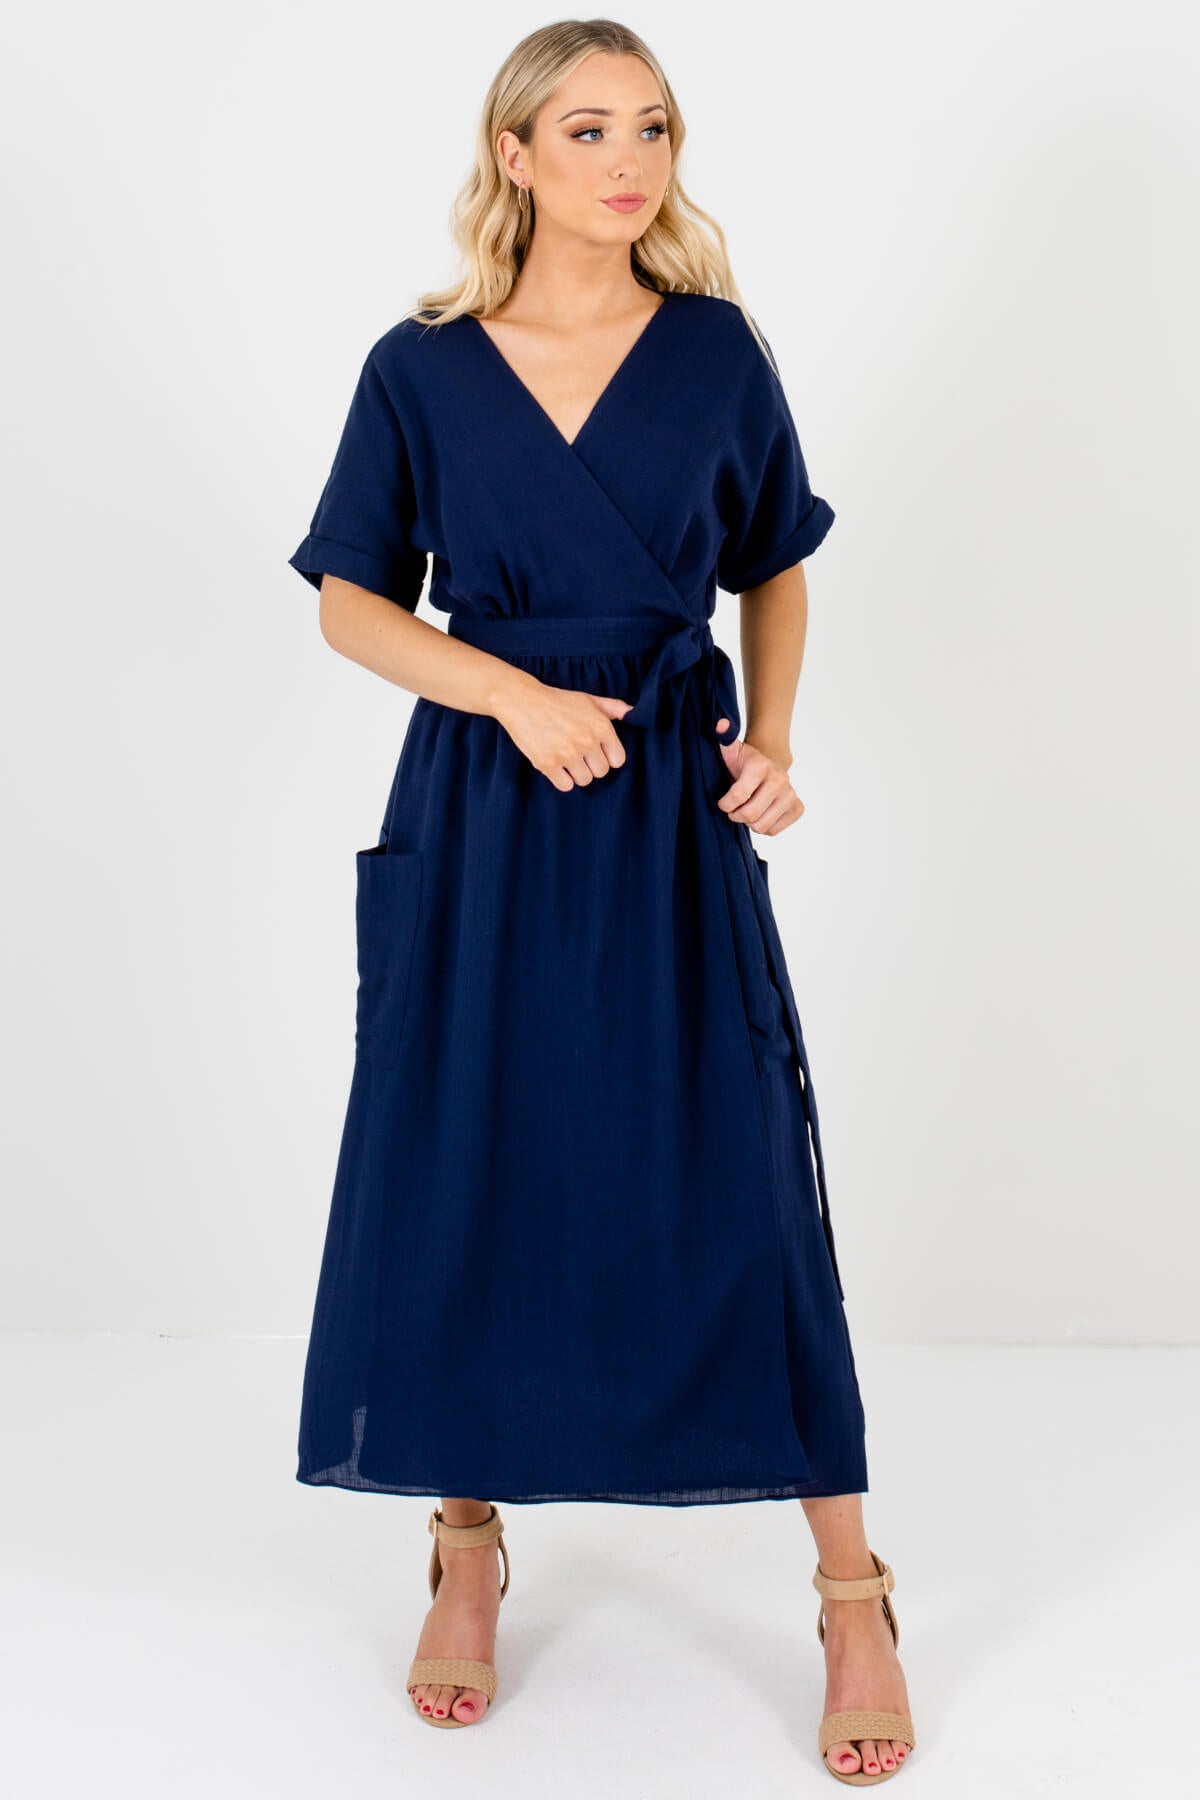 Dark Navy Blue Boutique Wrap Maxi Dresses with Pockets